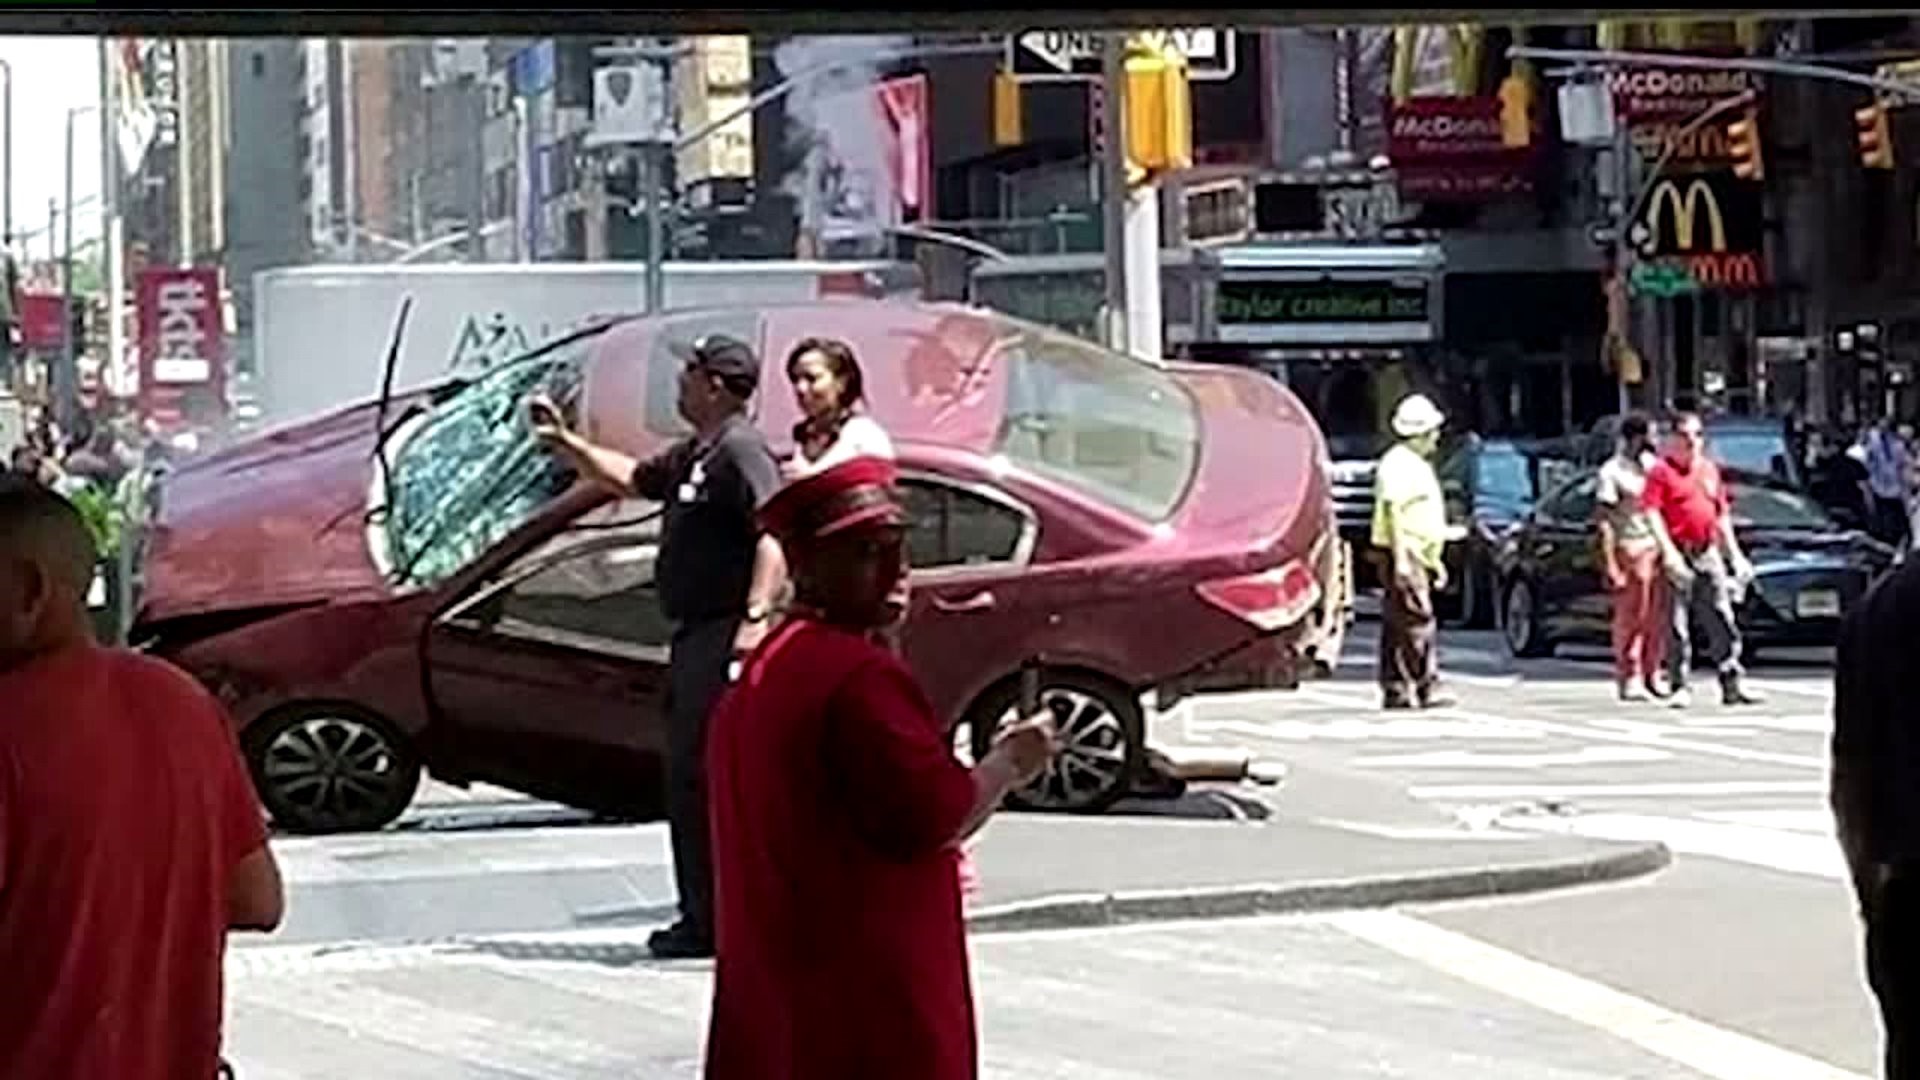 Car slams into Times Square, killing 1 and injuring 22